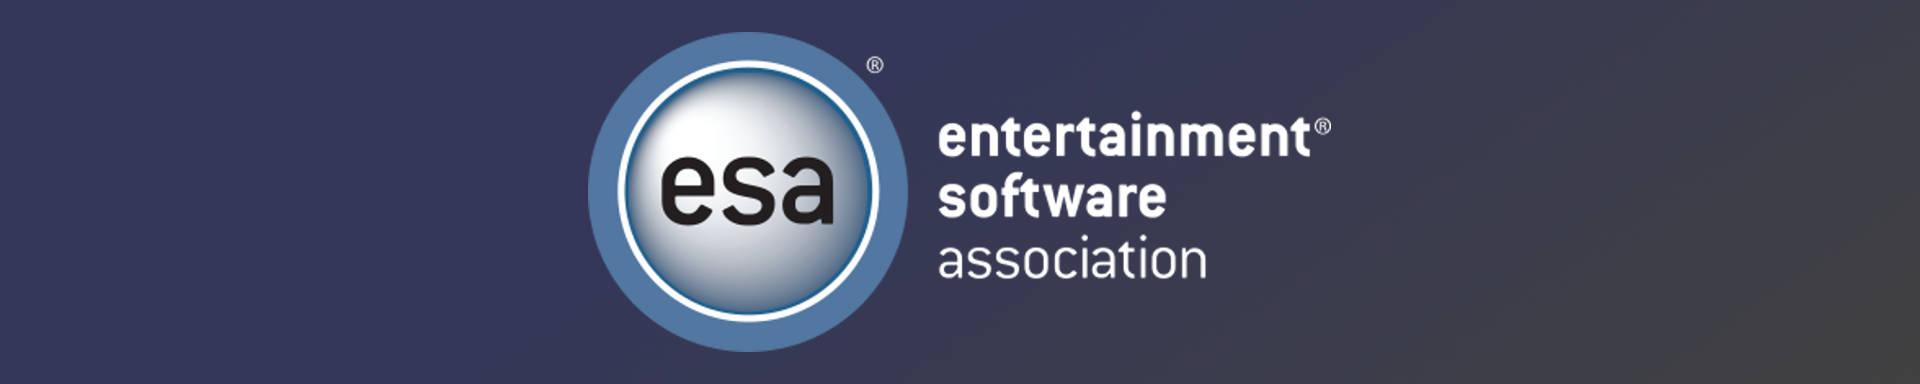 Violent Video Games Entertainment Software Association slice